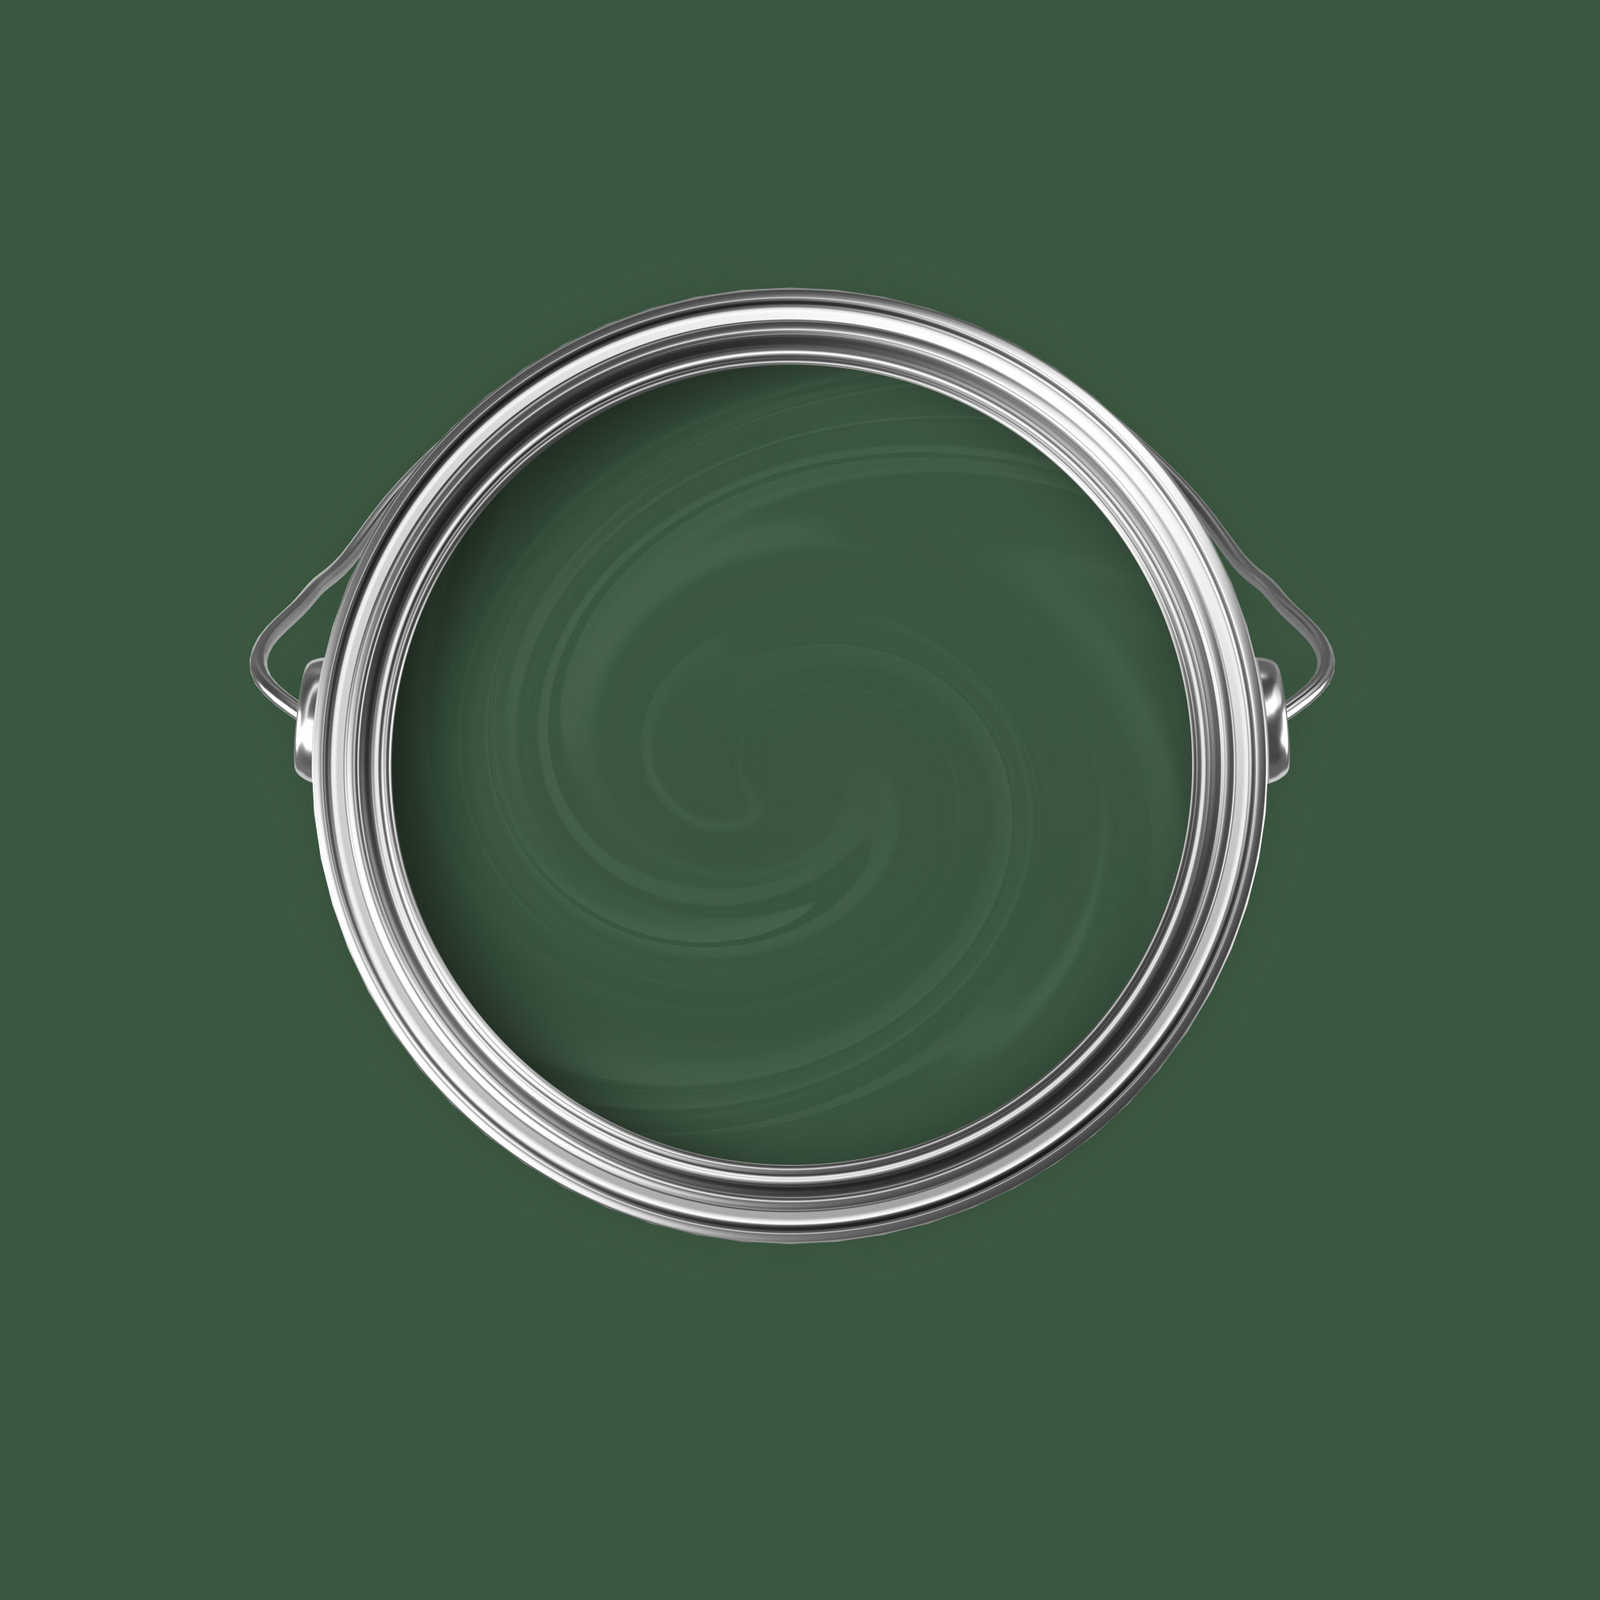             Premium Wandfarbe kräftiges Moosgrün »Gorgeous Green« NW505 – 5 Liter
        